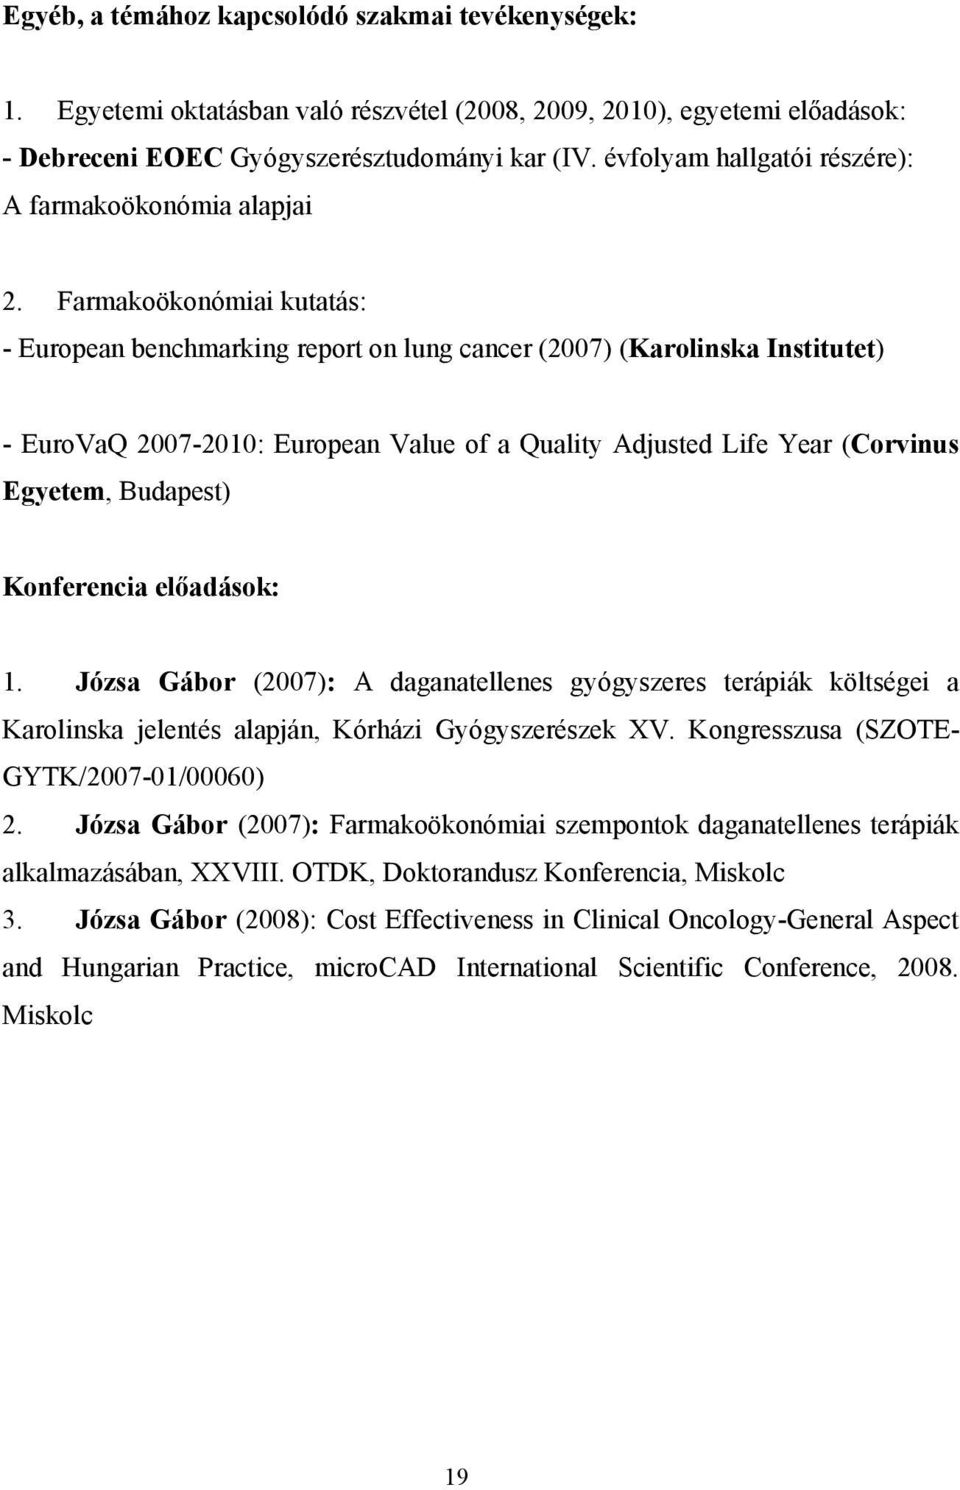 Farmakoökonómiai kutatás: - European benchmarking report on lung cancer (2007) (Karolinska Institutet) - EuroVaQ 2007-2010: European Value of a Quality Adjusted Life Year (Corvinus Egyetem, Budapest)